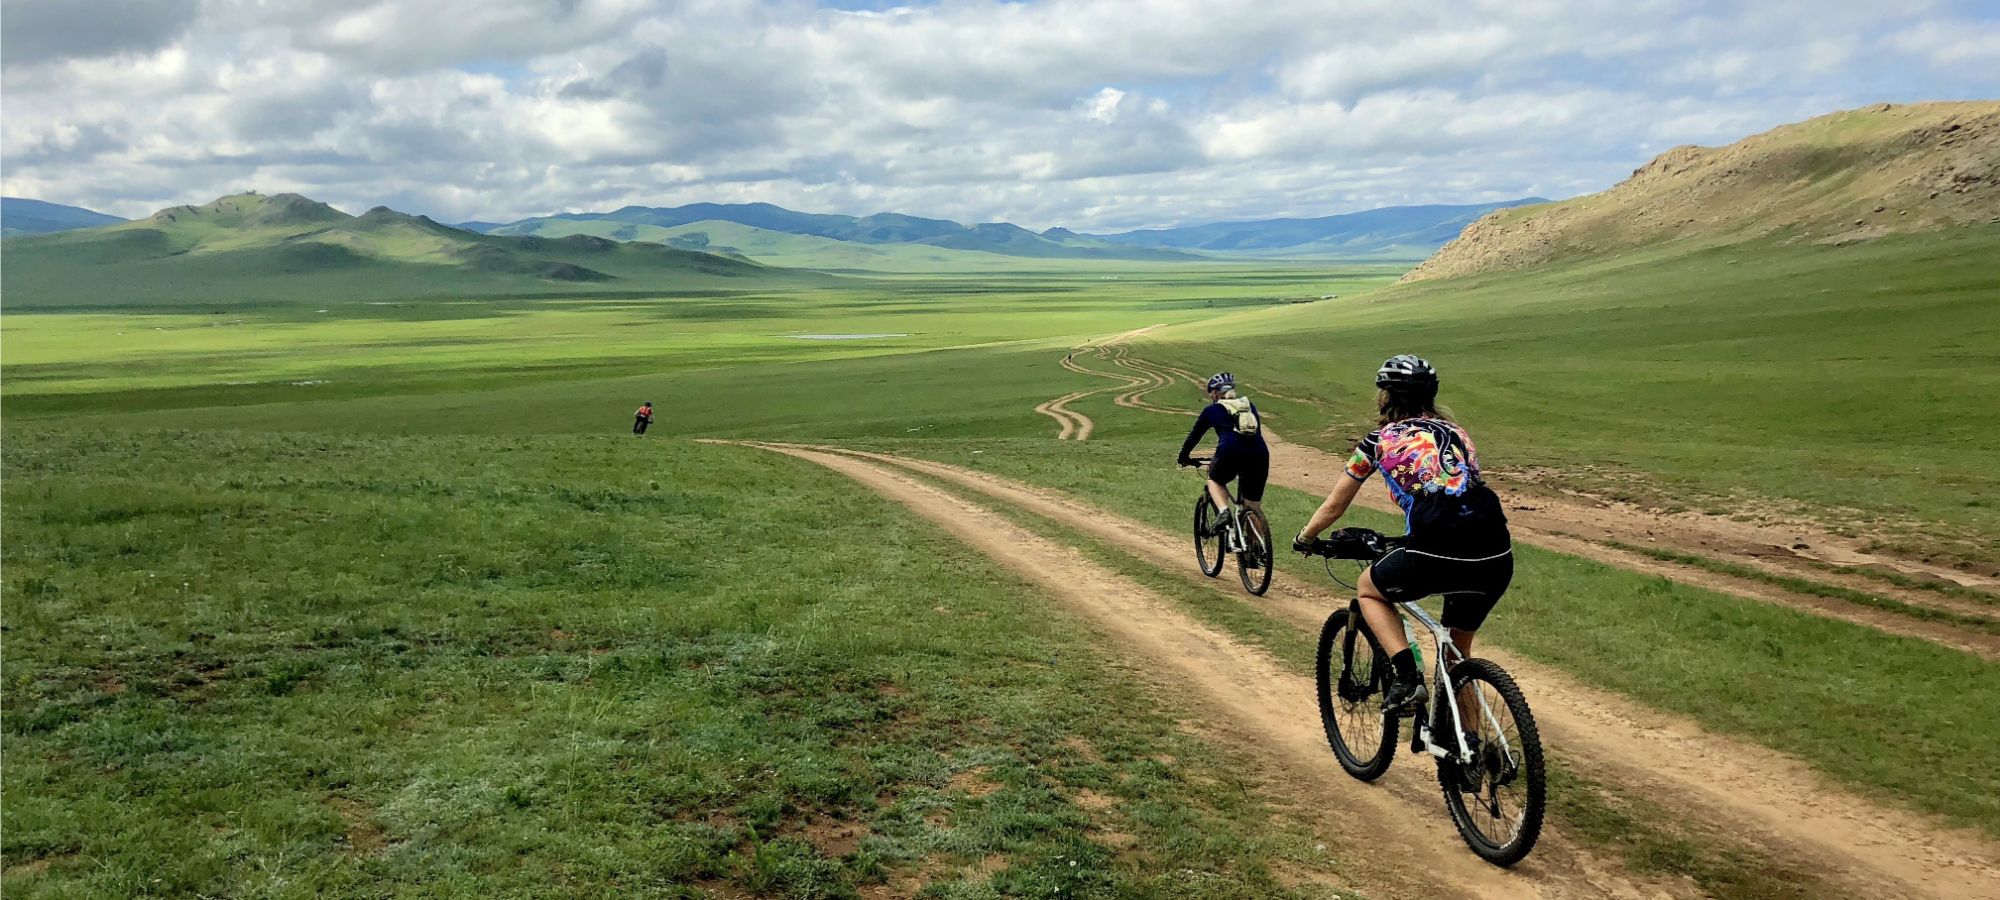 Cycling Holidays Mongolia